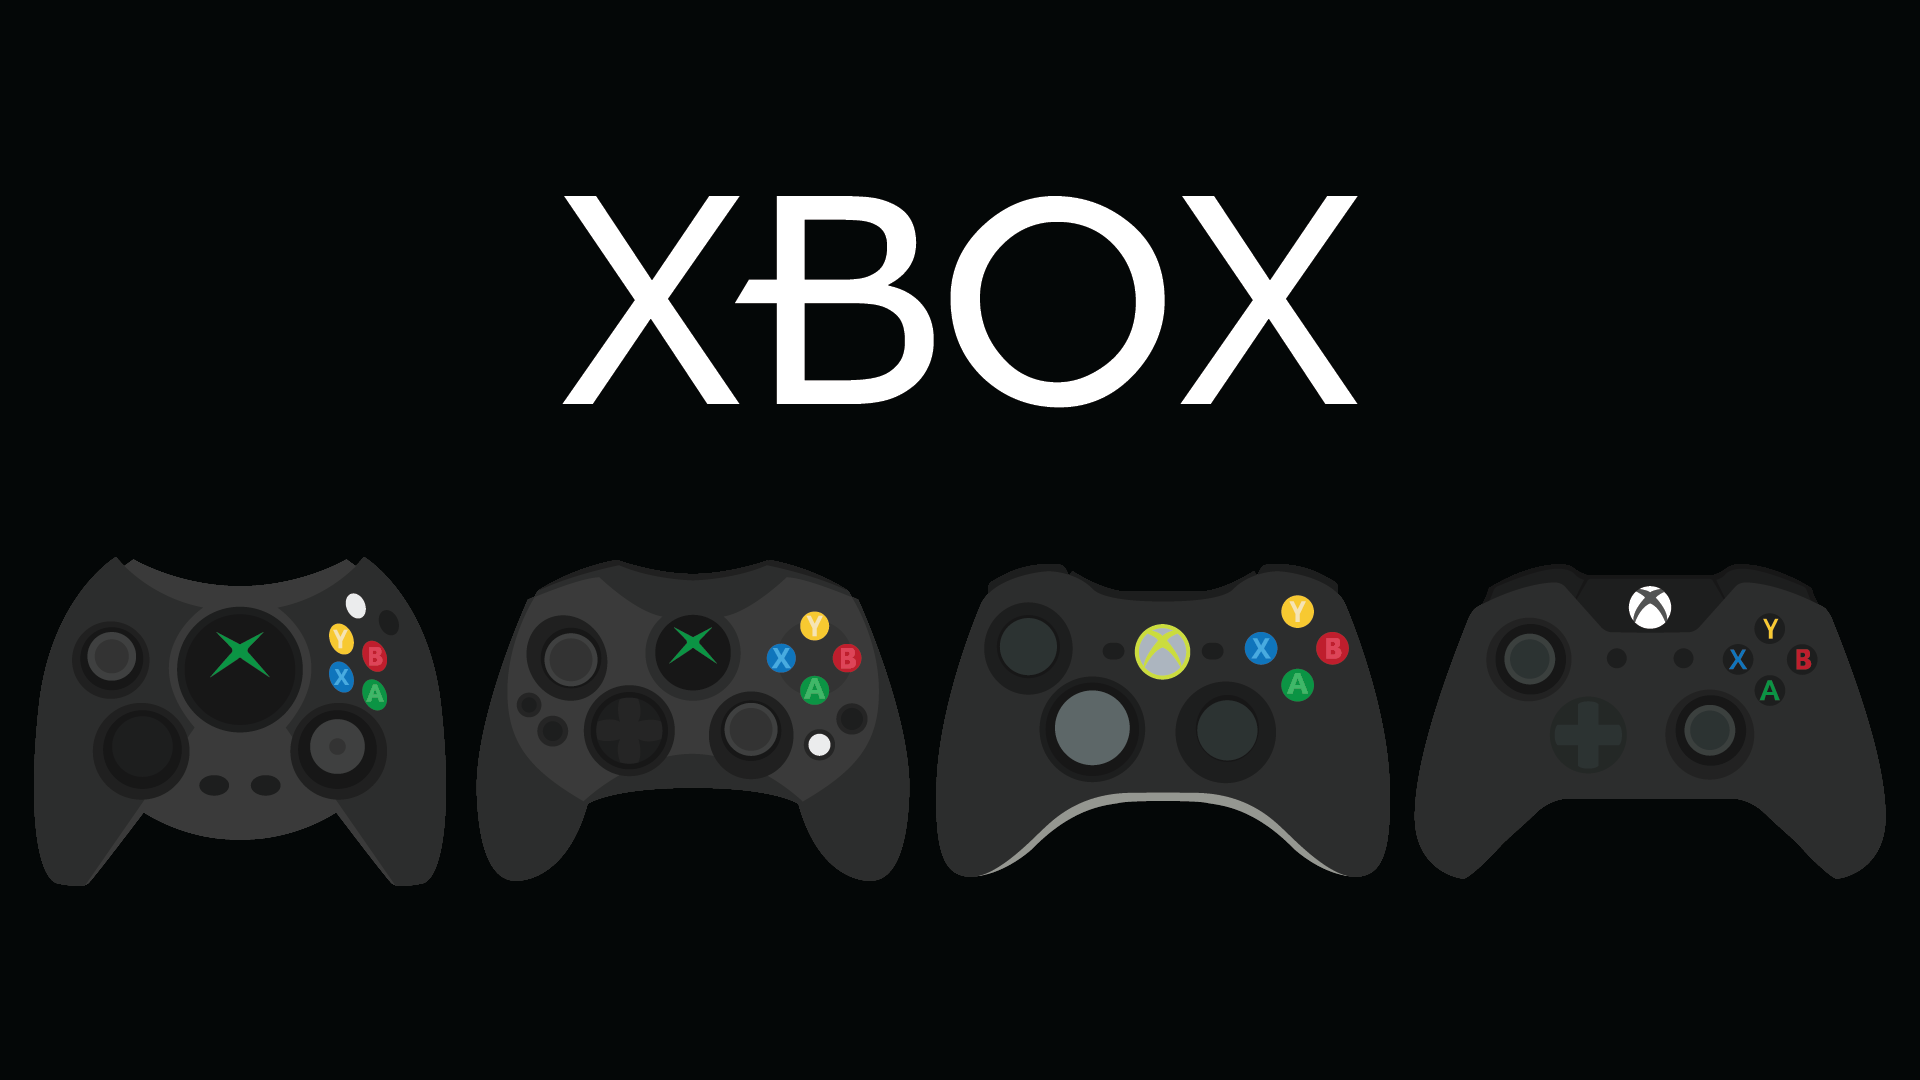 Xbox Controller Wallpaper (1920x1080) : xboxone